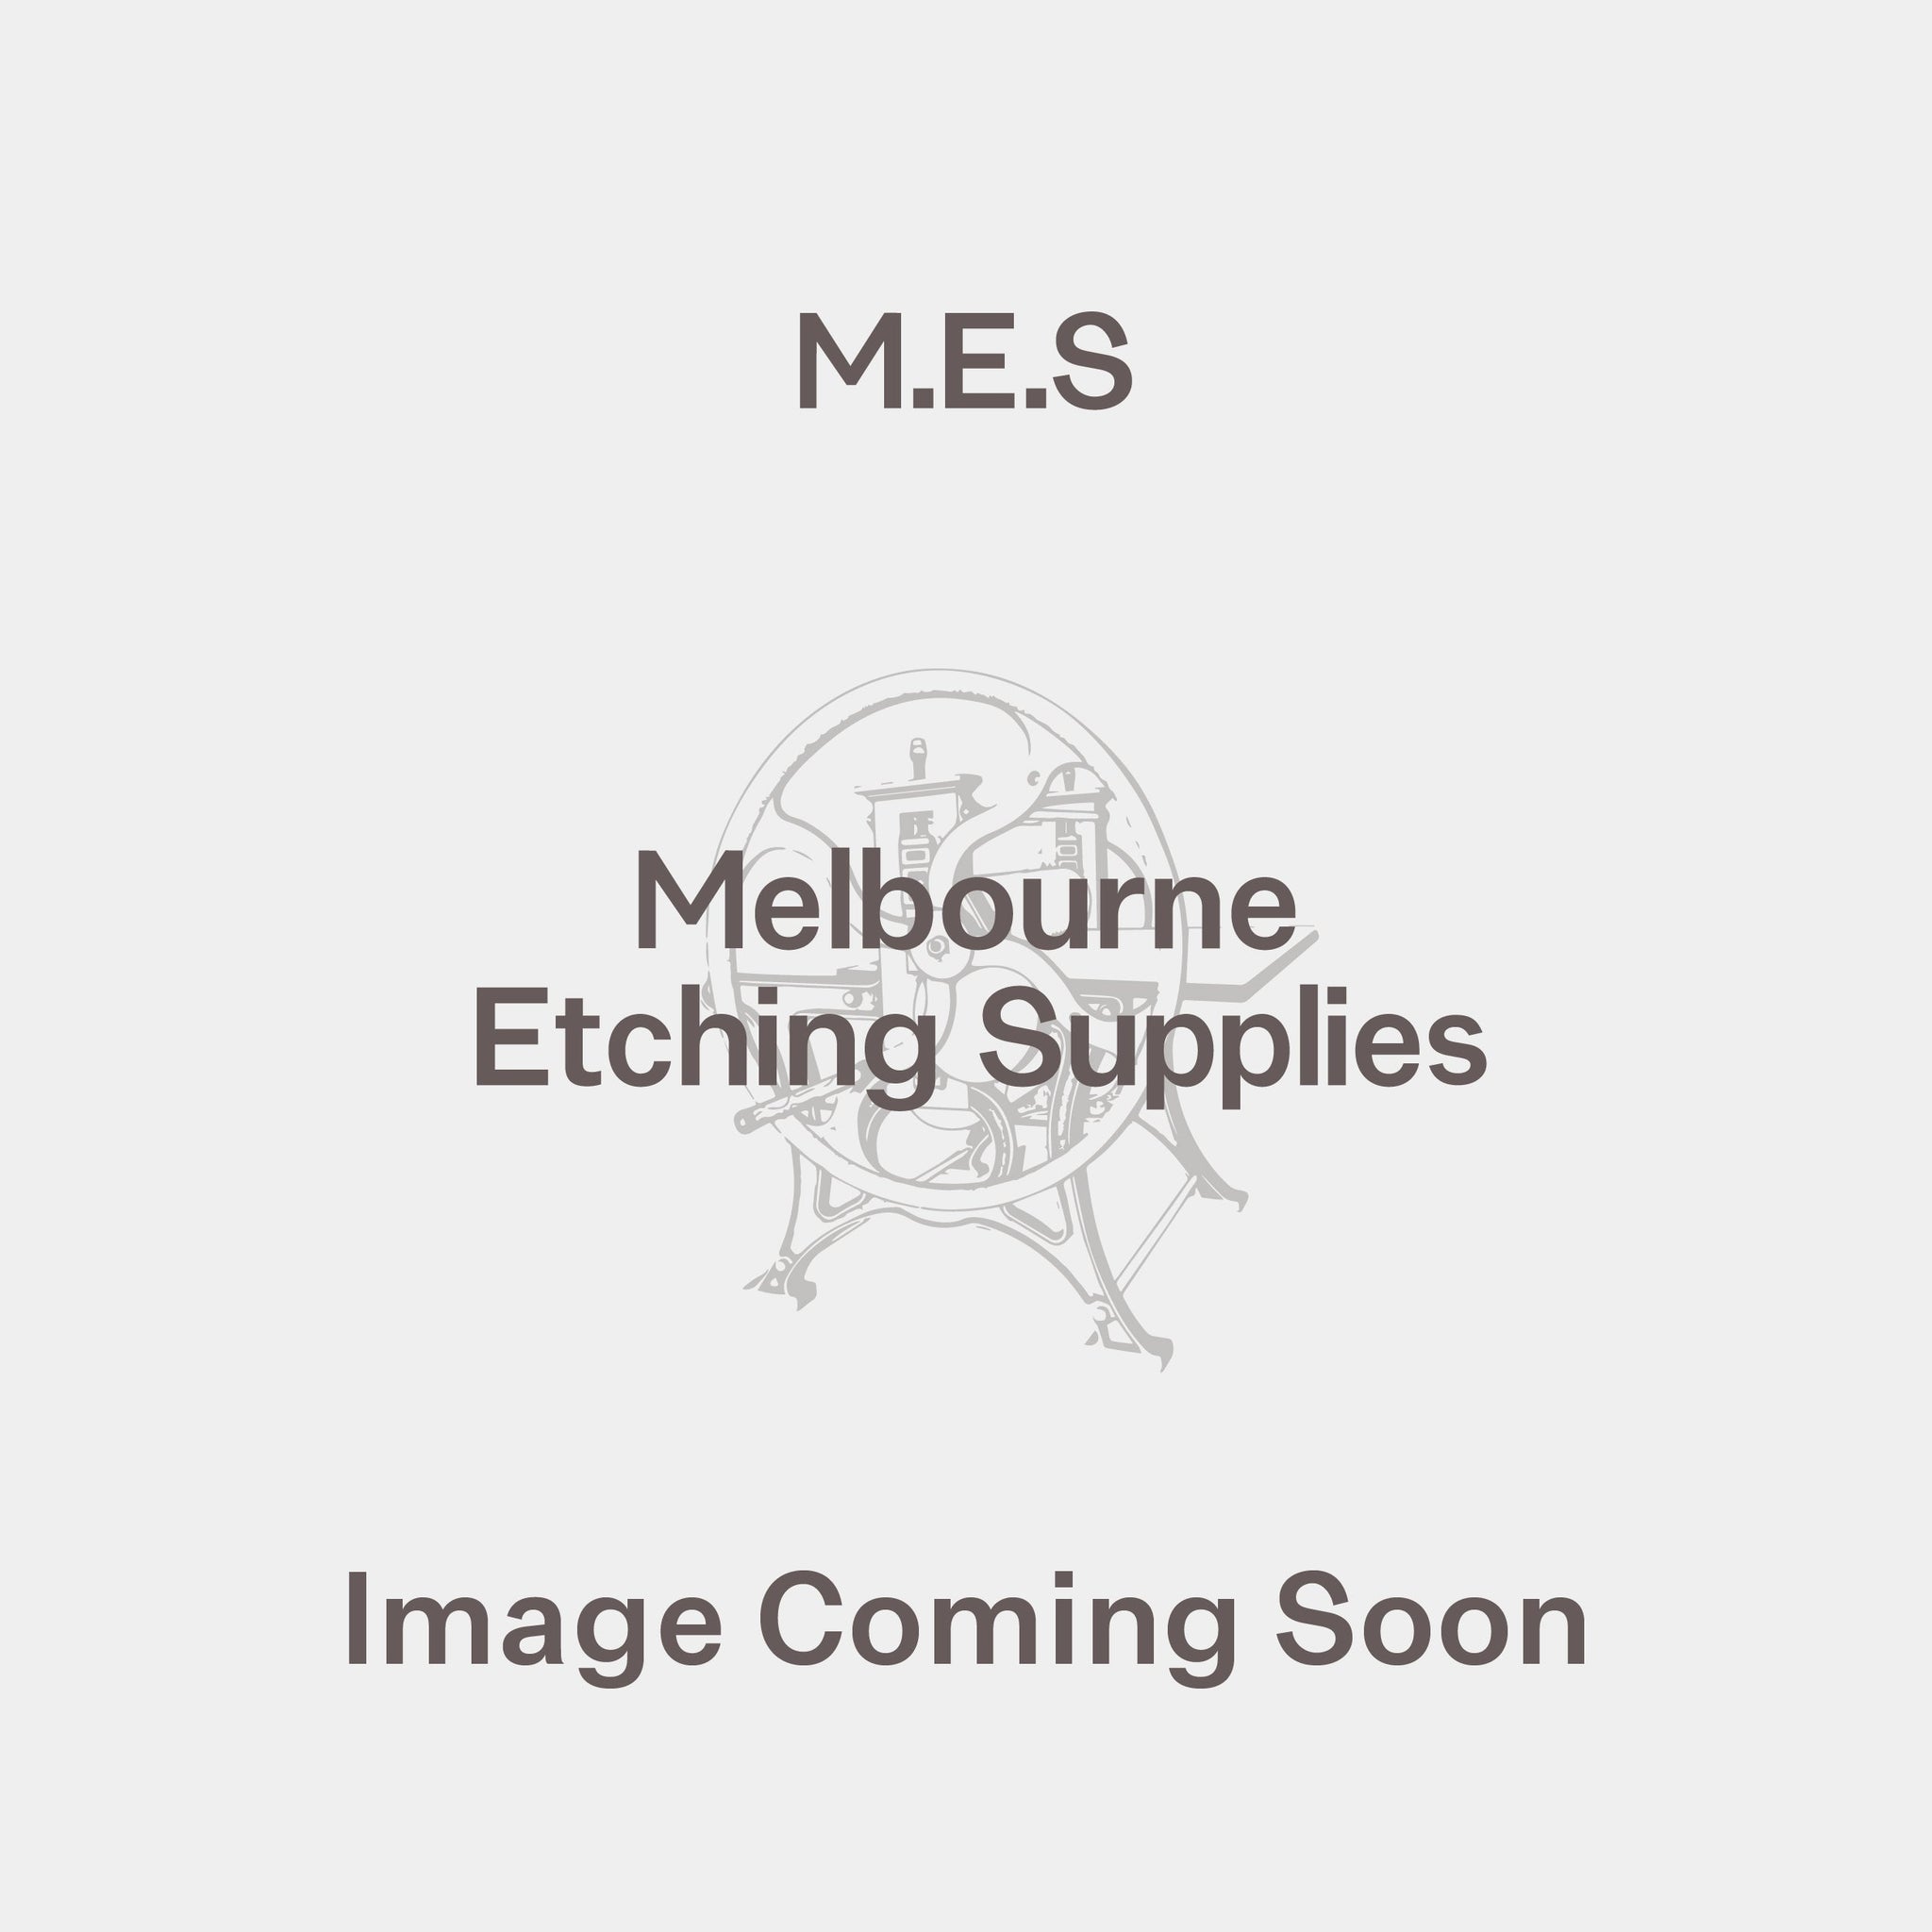 Lascaux Tusche Waterproof  500ml - Melbourne Etching Supplies